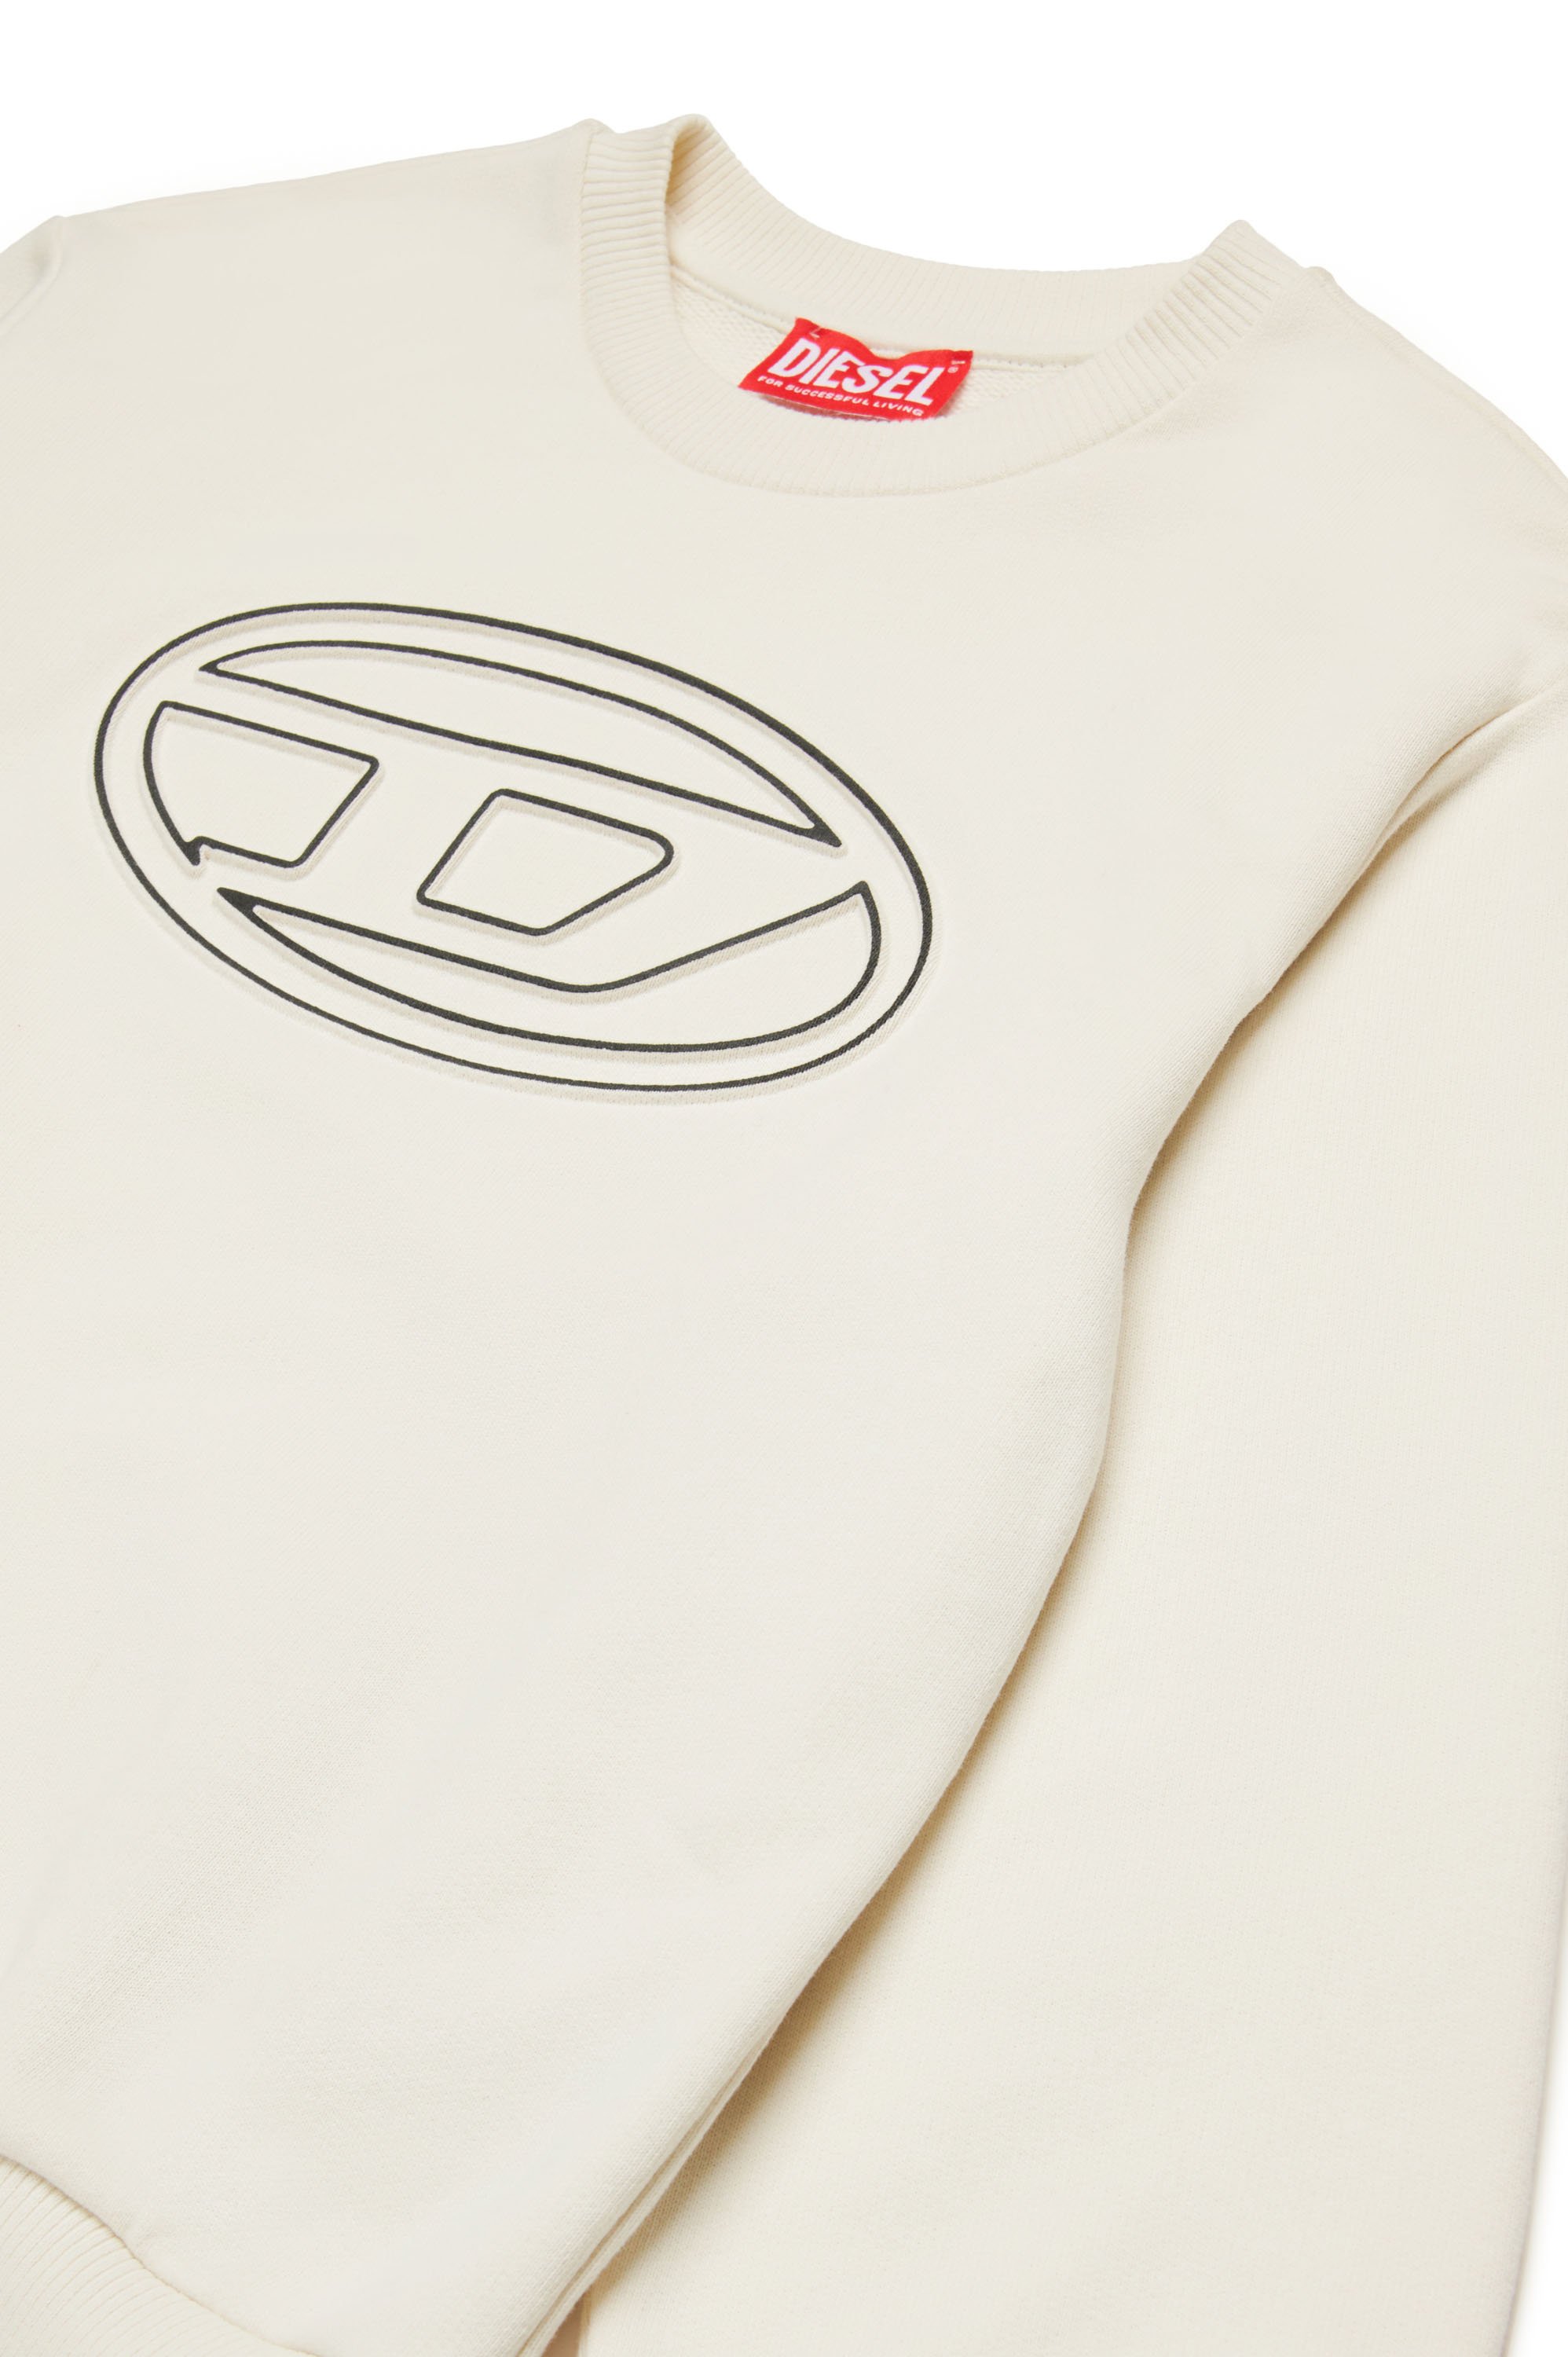 Diesel - SMARTBIGOVAL OVER, Homme Sweat-shirt avec logo Oval D embossé in Blanc - Image 3